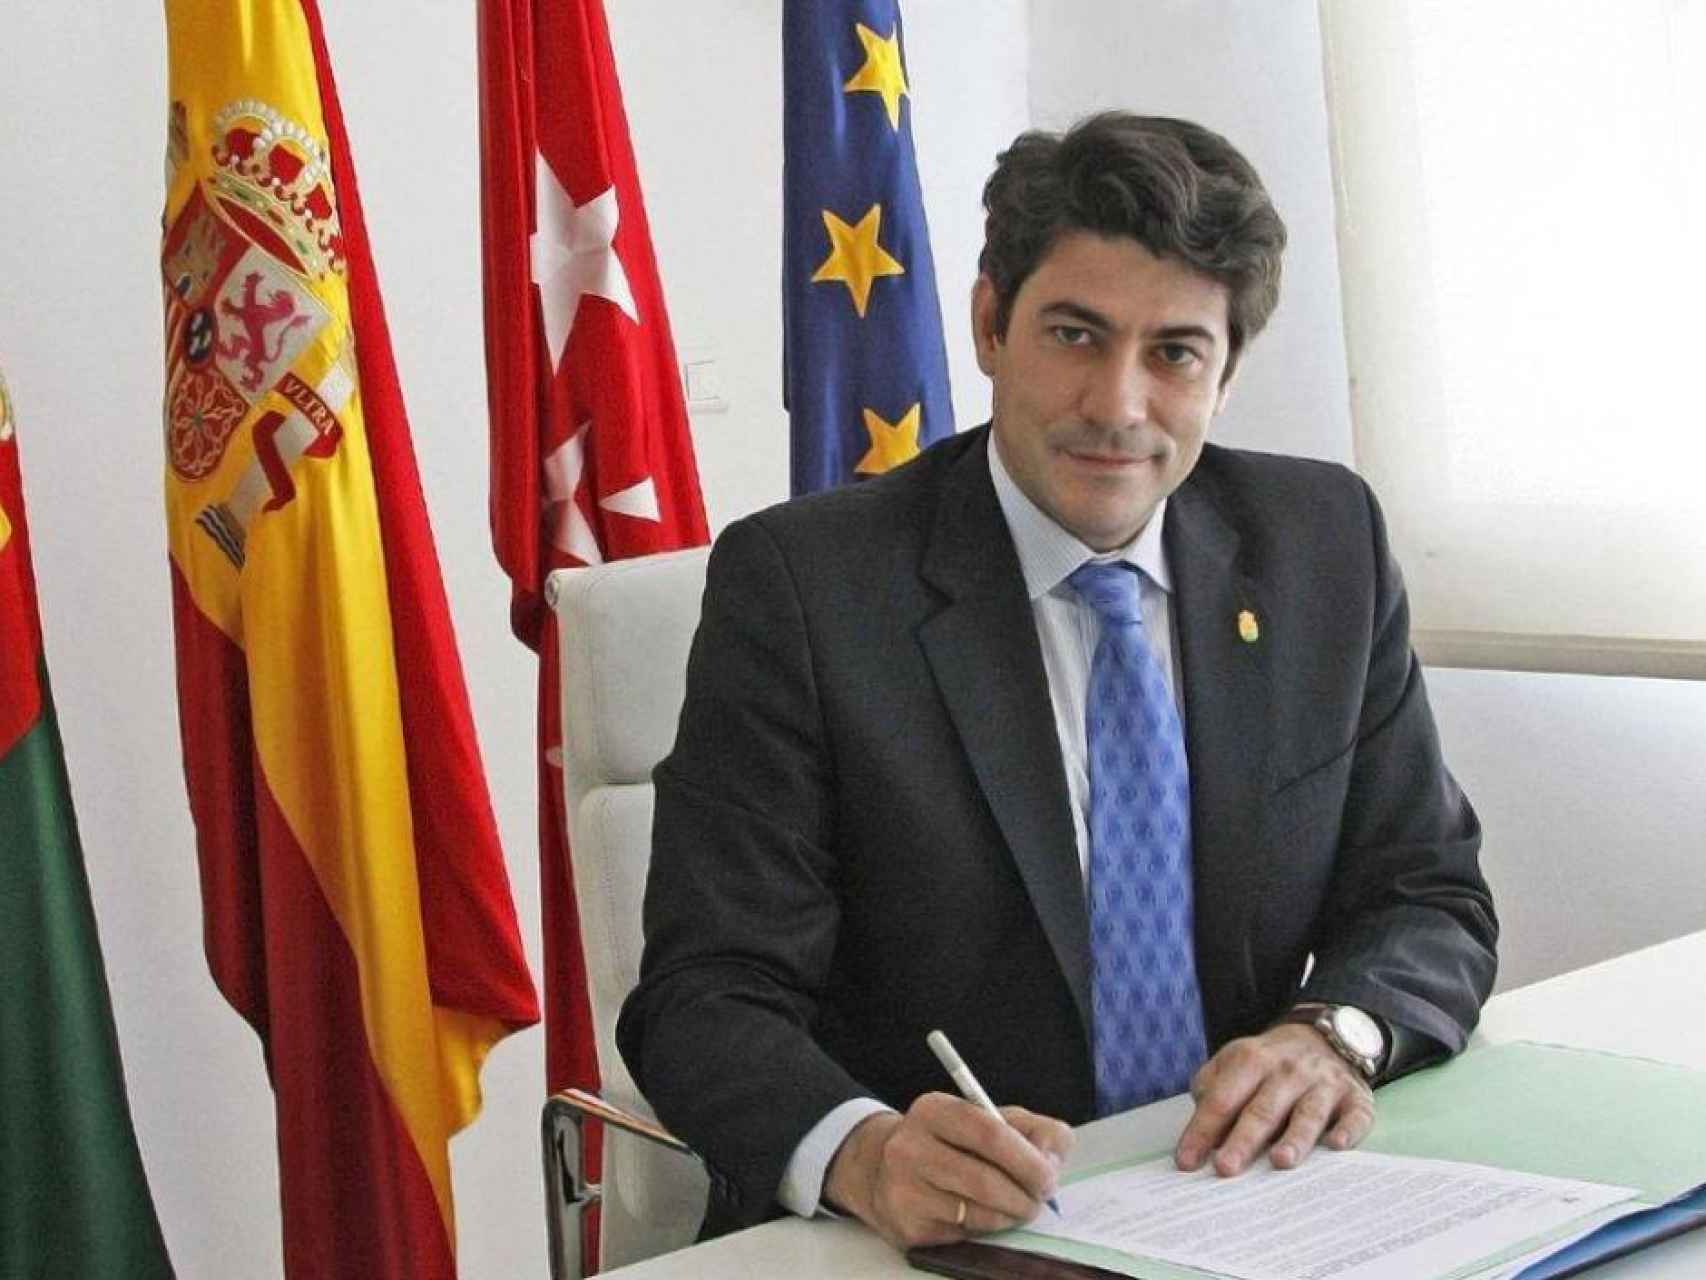 El alcalde de Alcorcón, David Pérez.